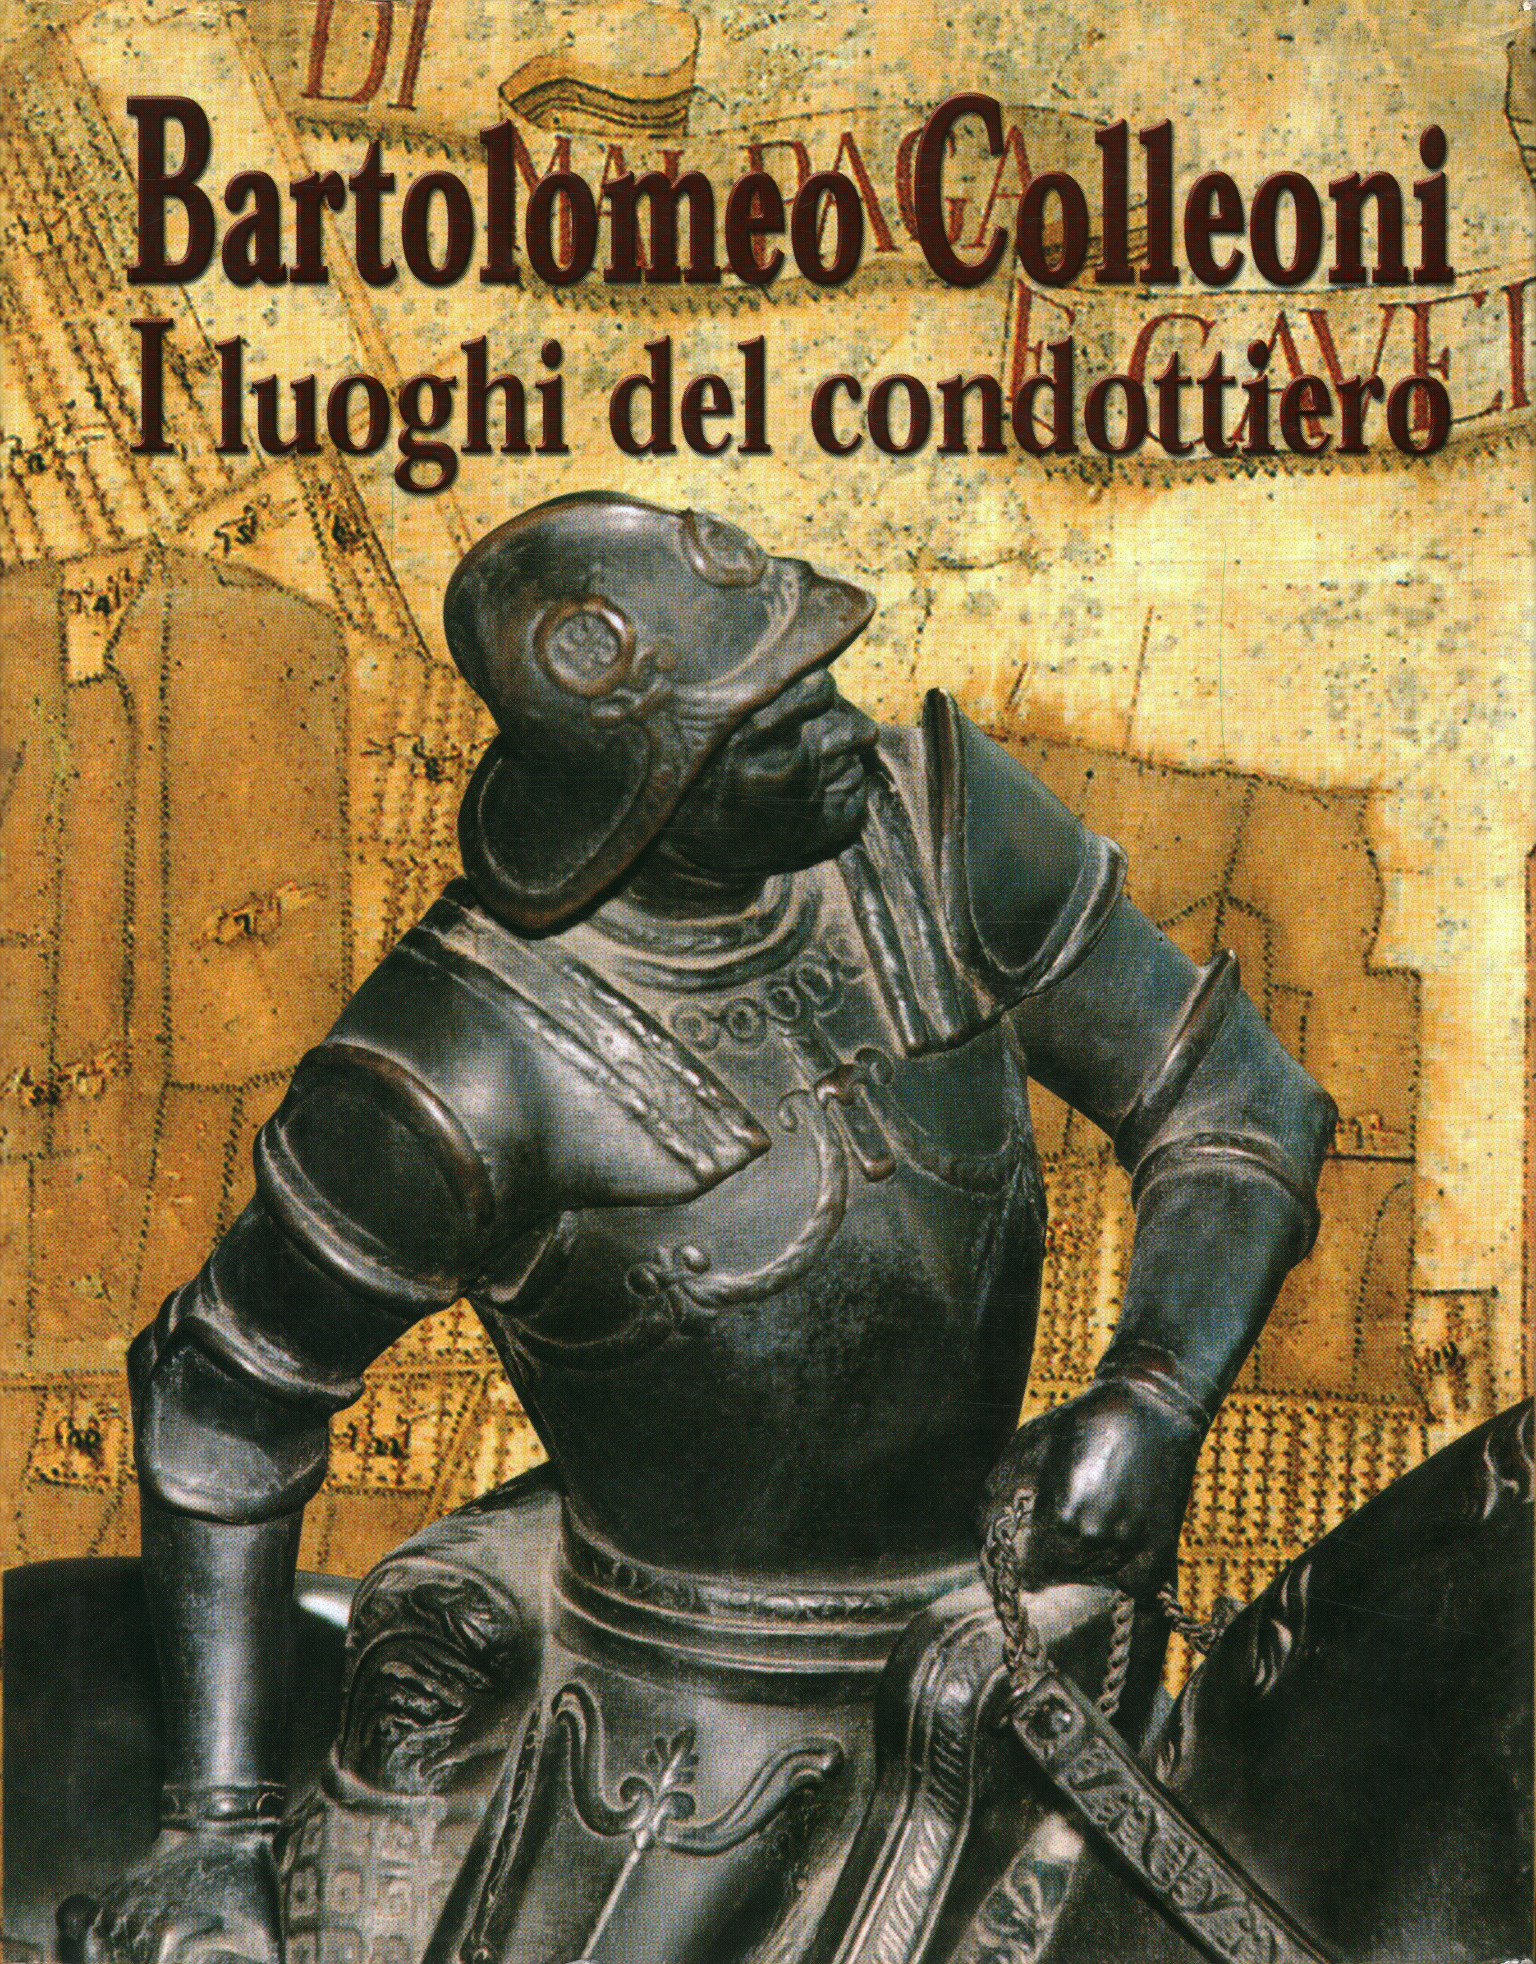 Bartolomeo Colleoni. Les lieux du condot